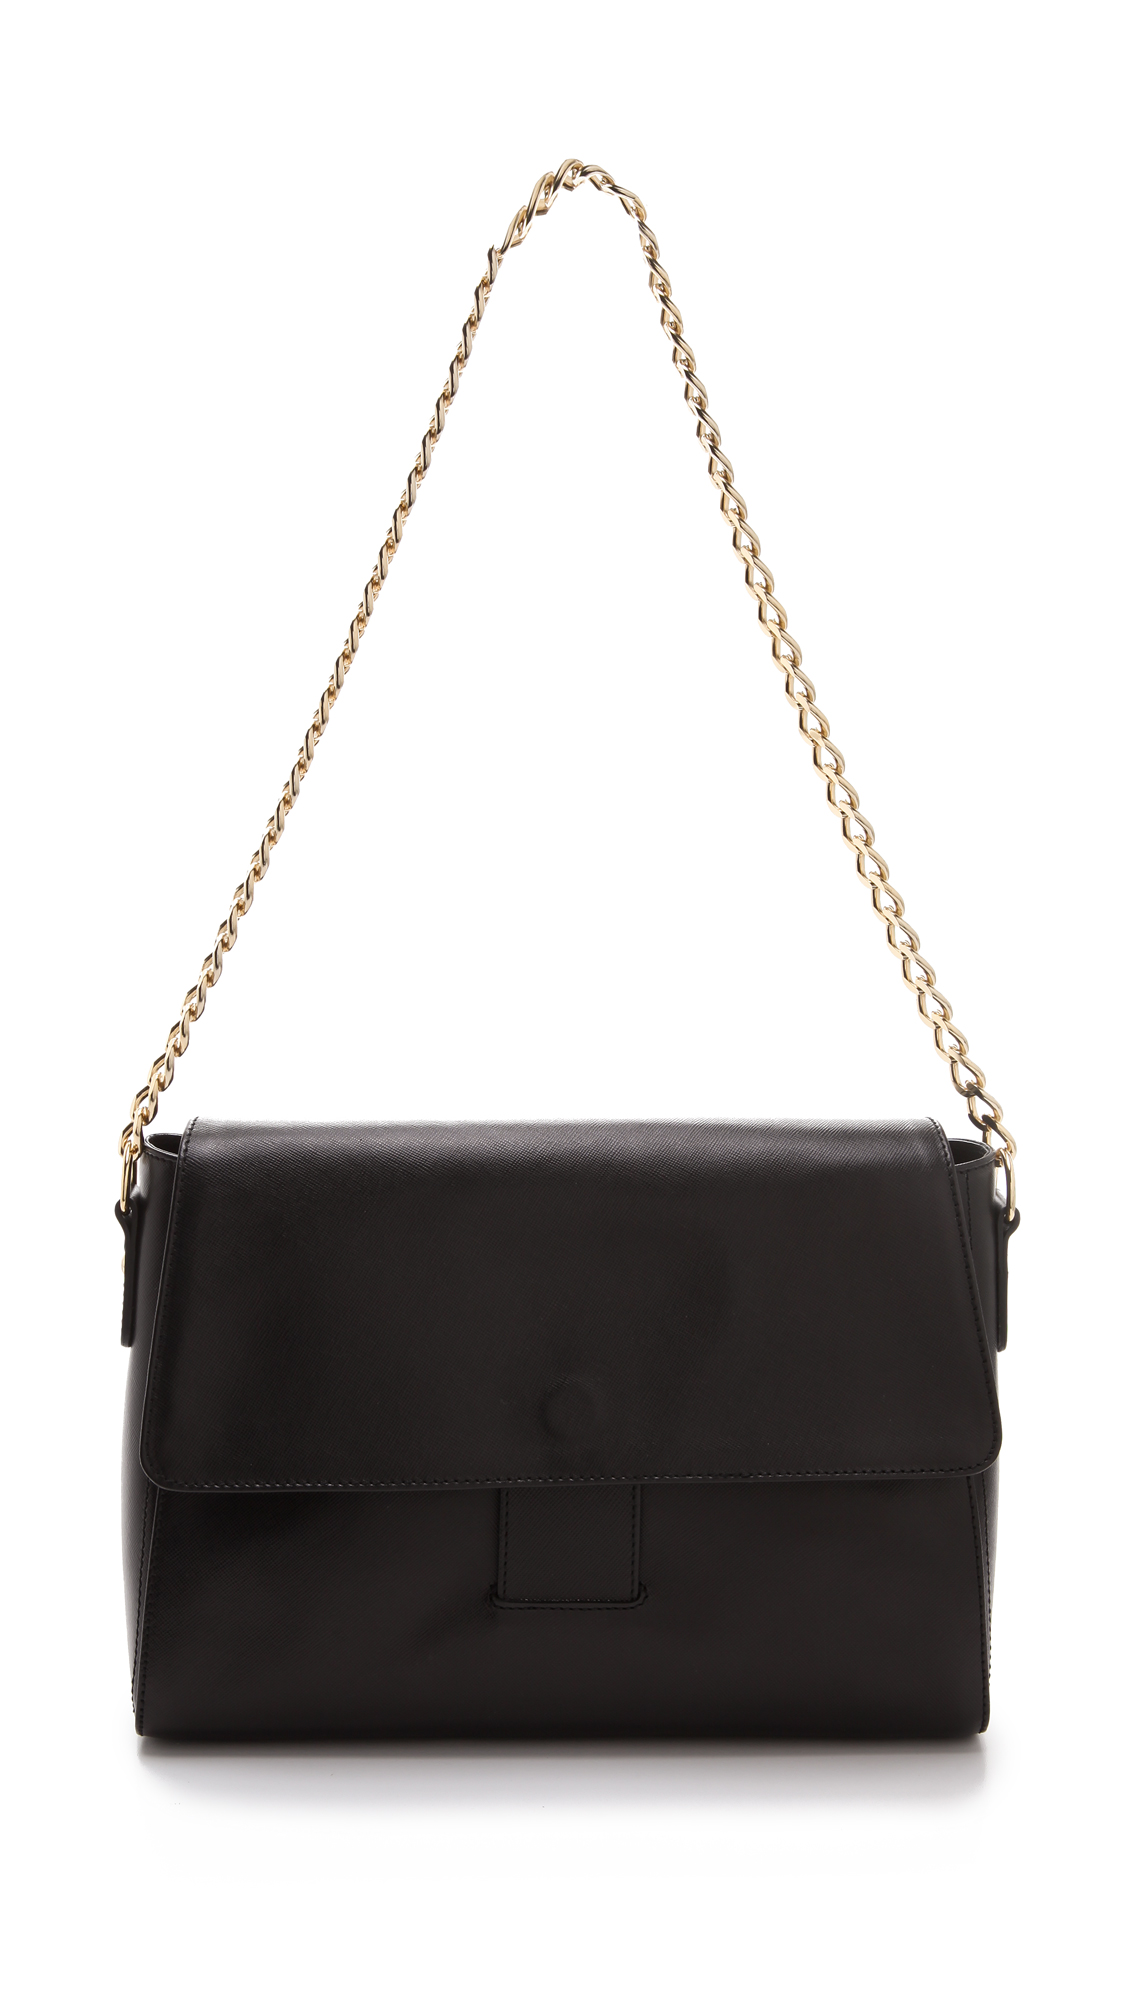 Lyst - A.P.C. Chain Shoulder Bag in Black